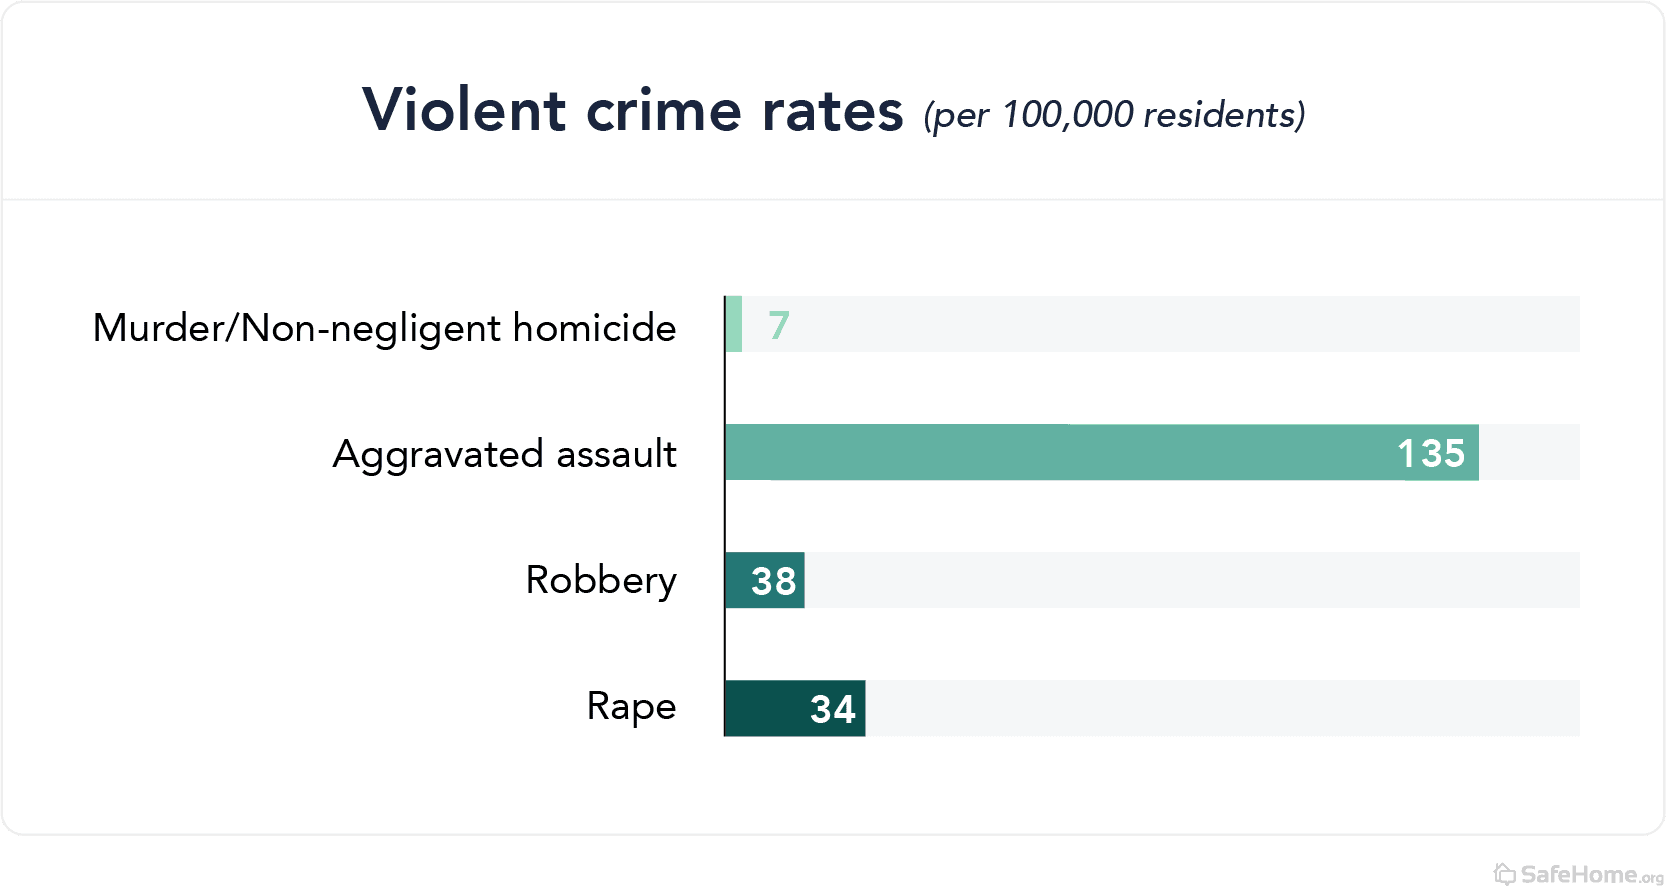 Kentucky violent crime rates